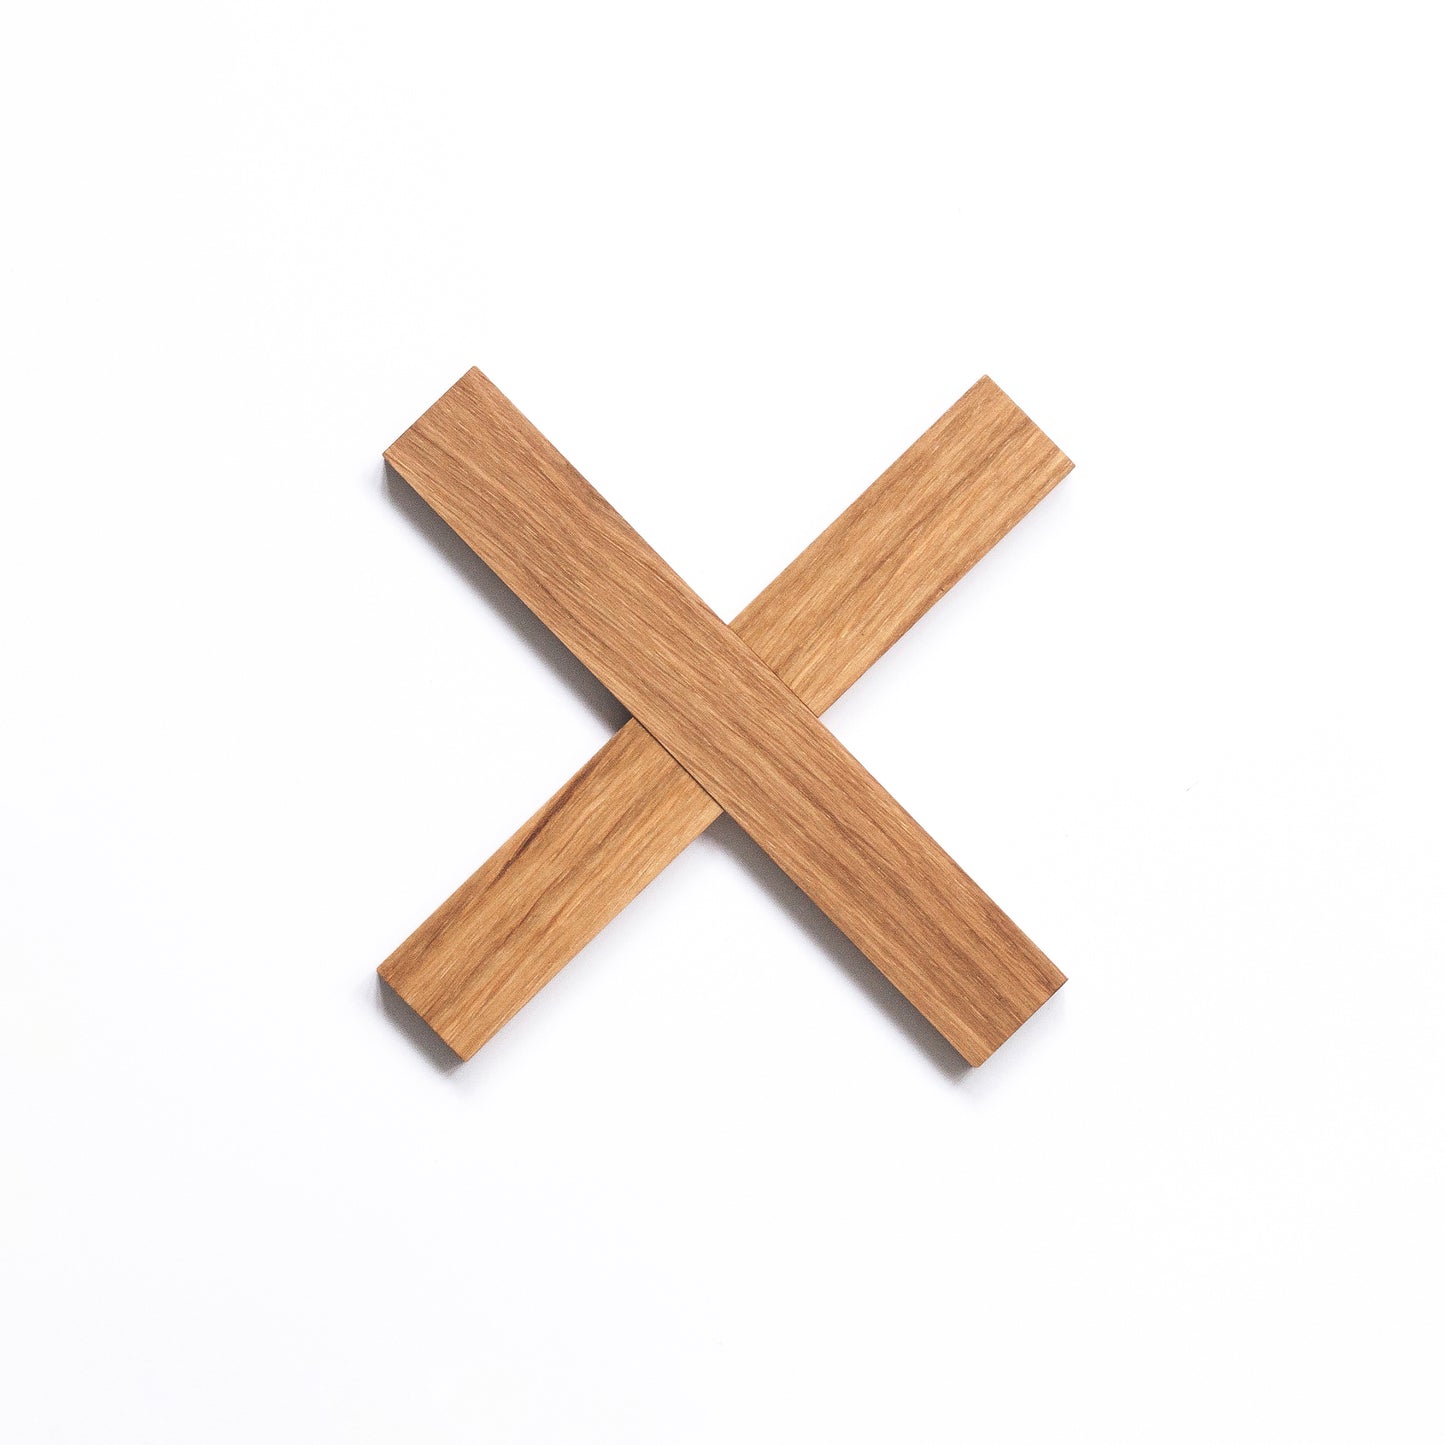 Simple cross trivet for nordic home by Minumo kuumaalus pliksplaks dessous de plat en bois